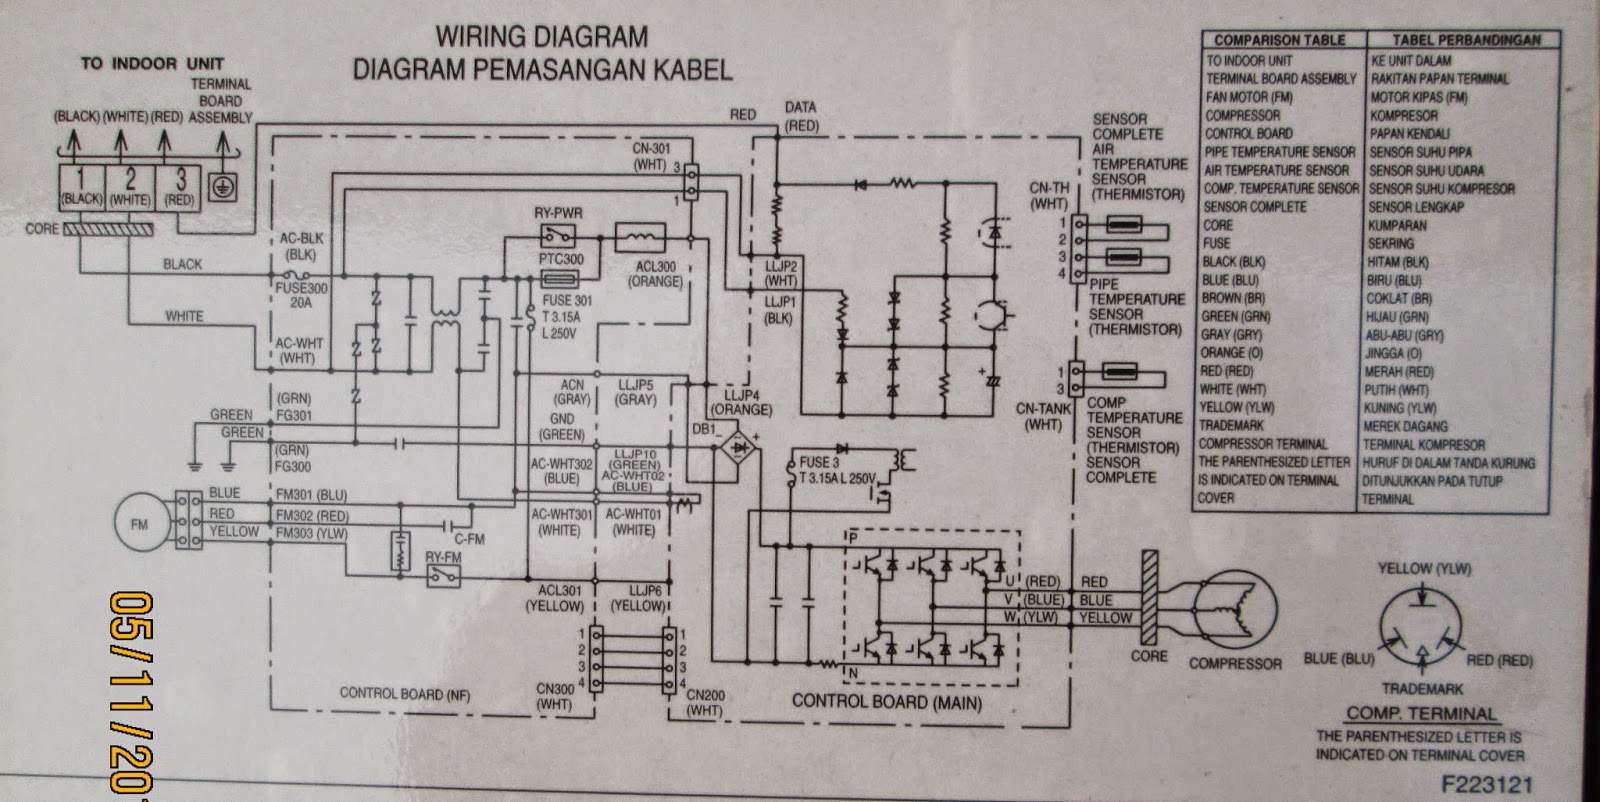 Wiring Diagram Ac Split from 2.bp.blogspot.com